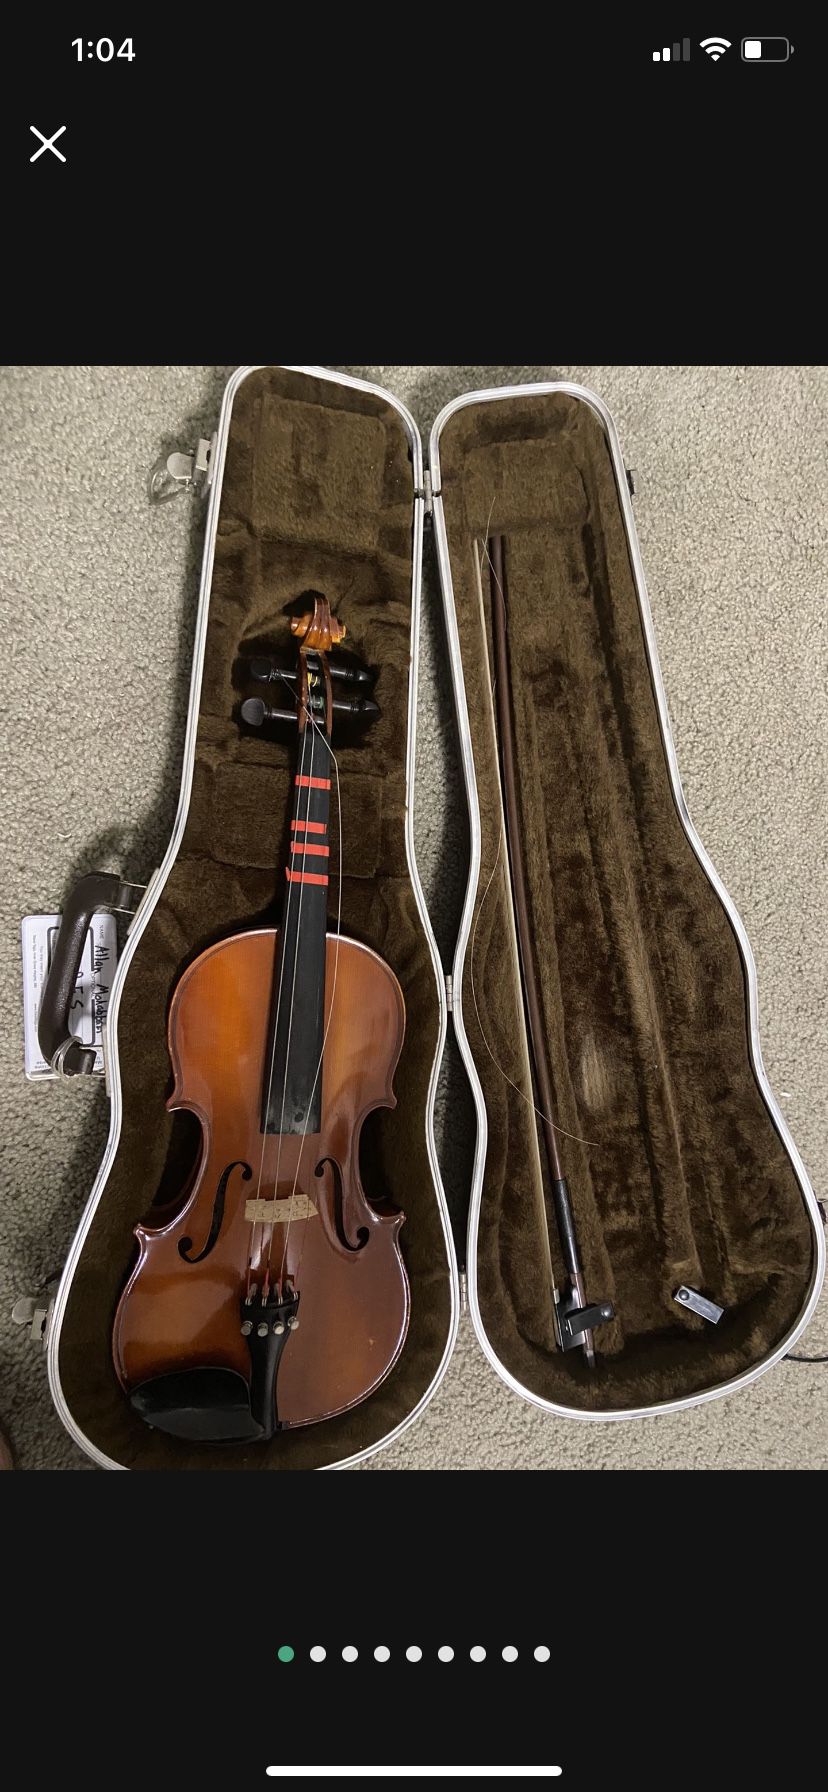 William Lewis And Son Violin 3/4